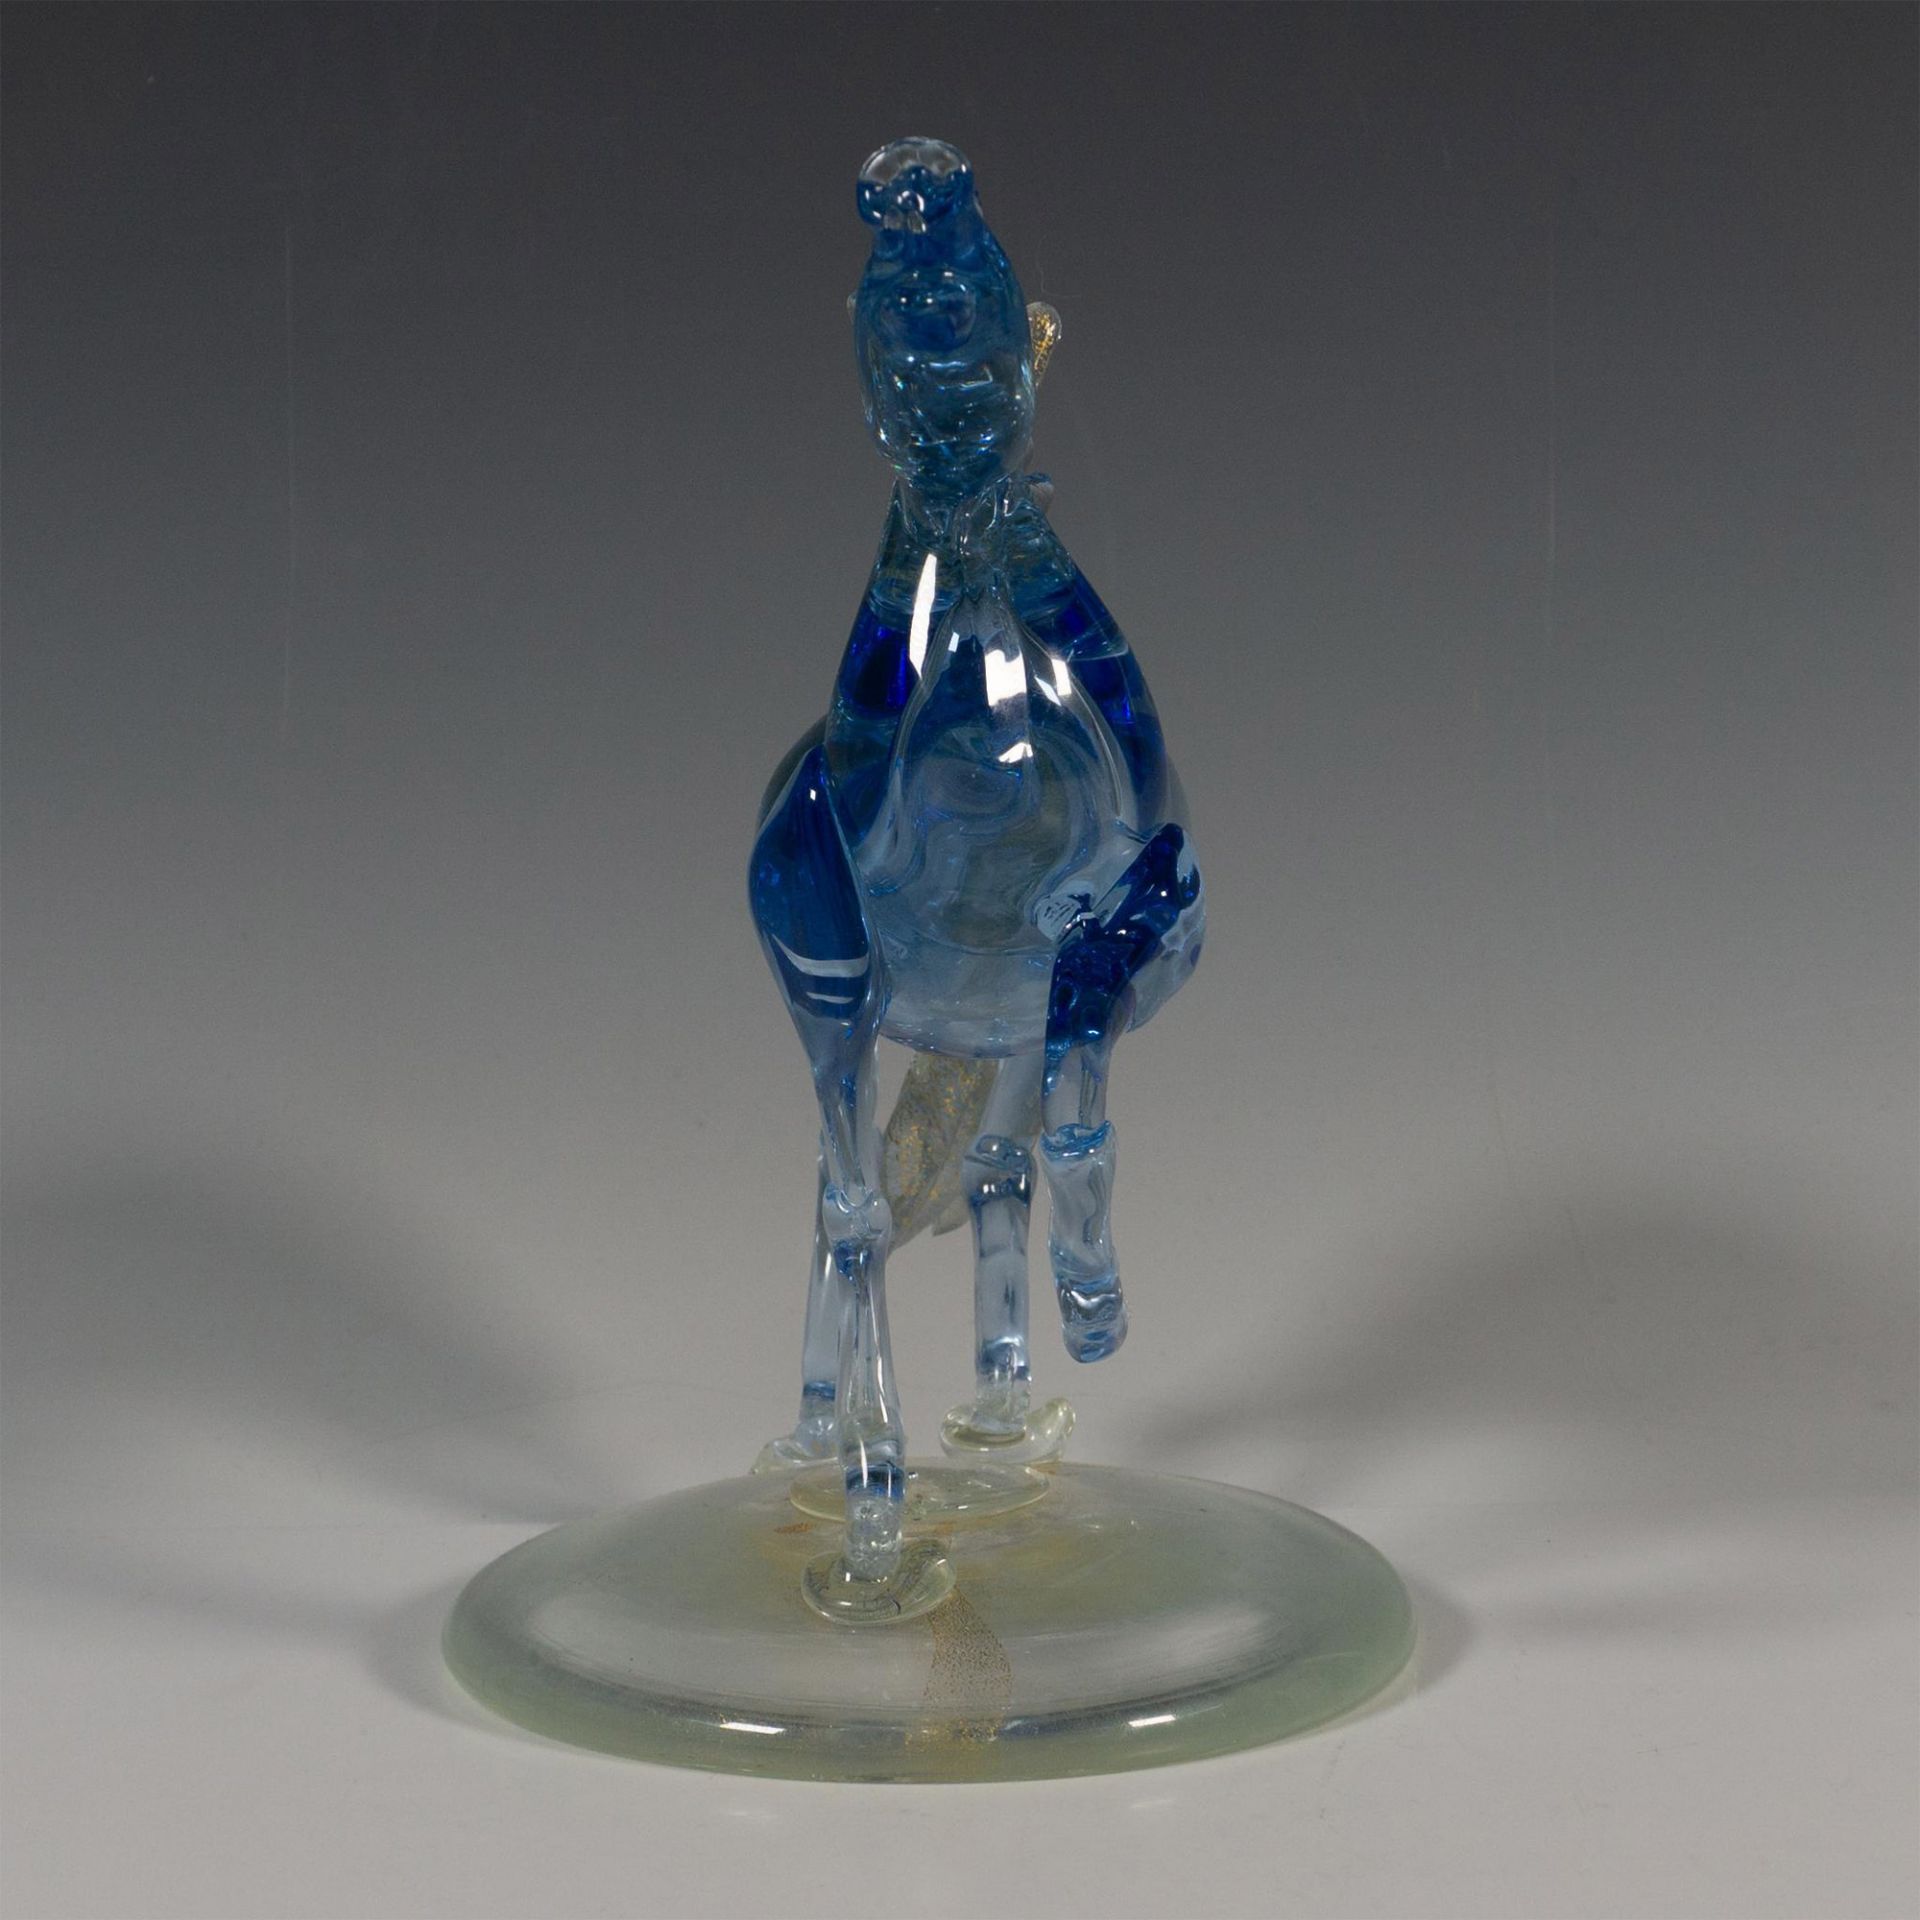 Original Hand Blown Glass Decorative Blue & Gold Horse - Image 2 of 4